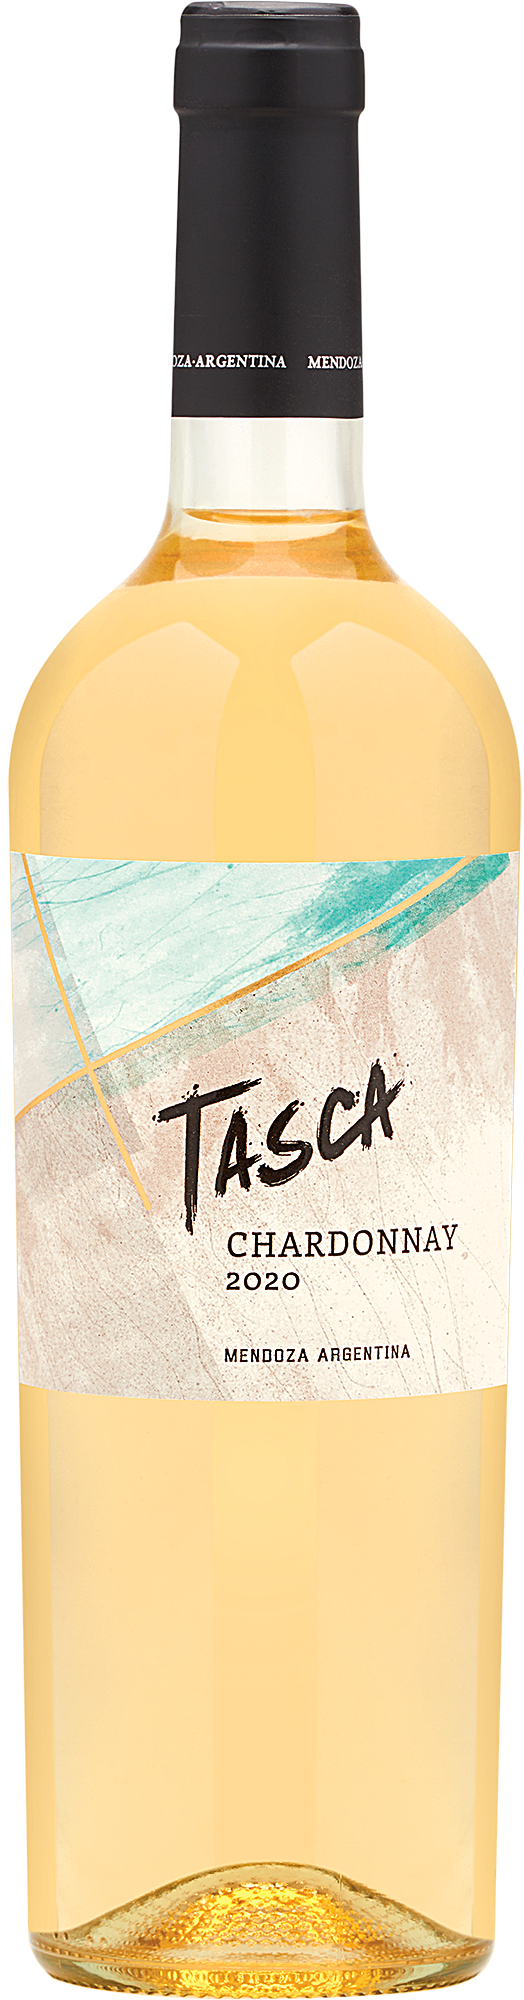 2020 Tasca Chardonnay